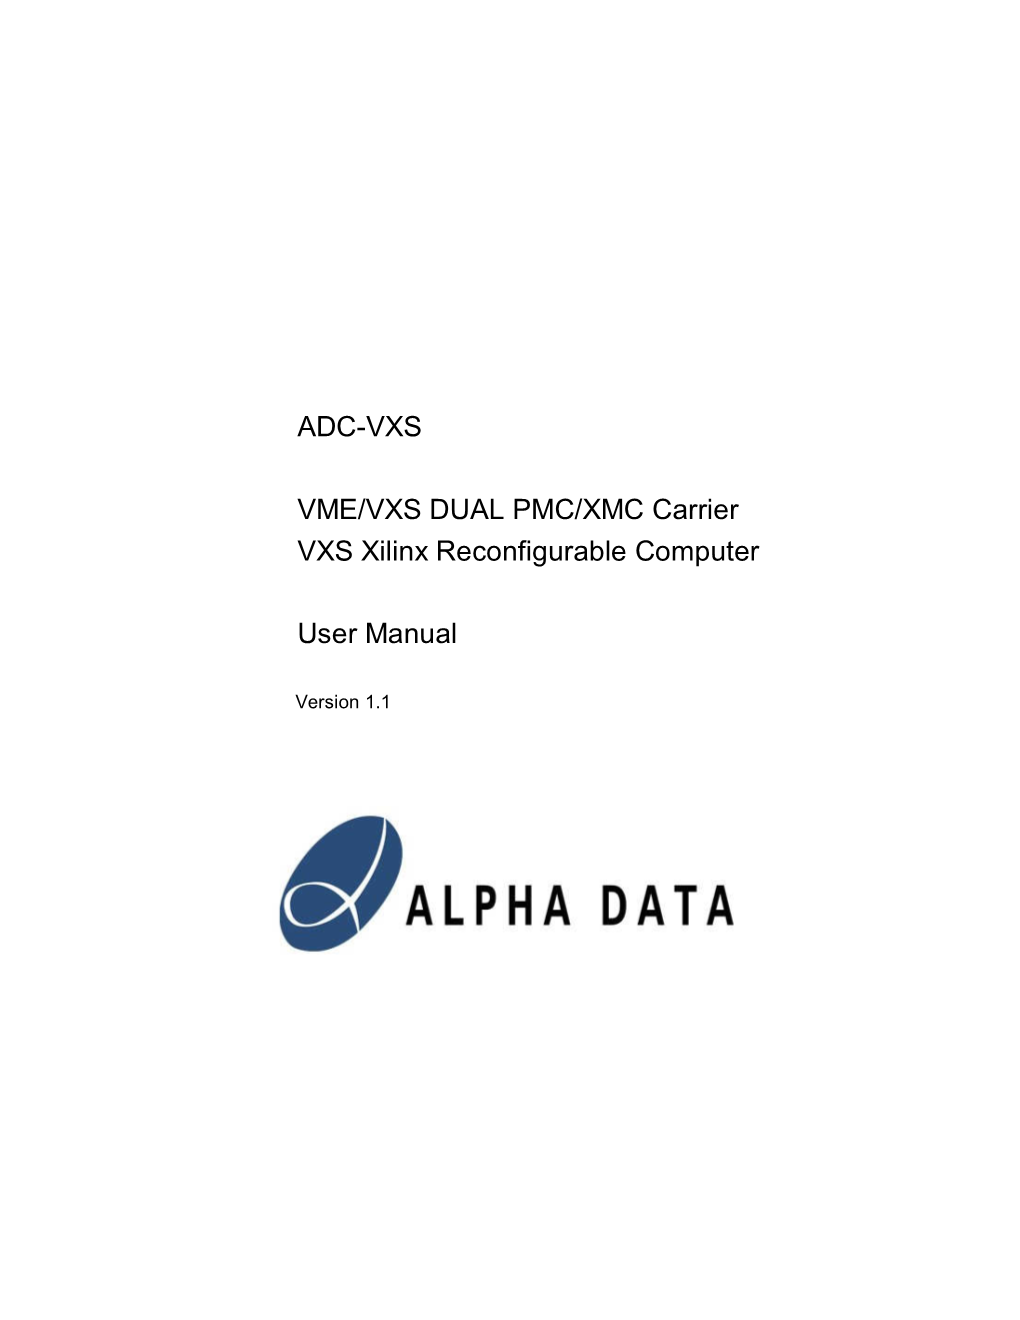 ADC-VXS User Manual Version 1.1